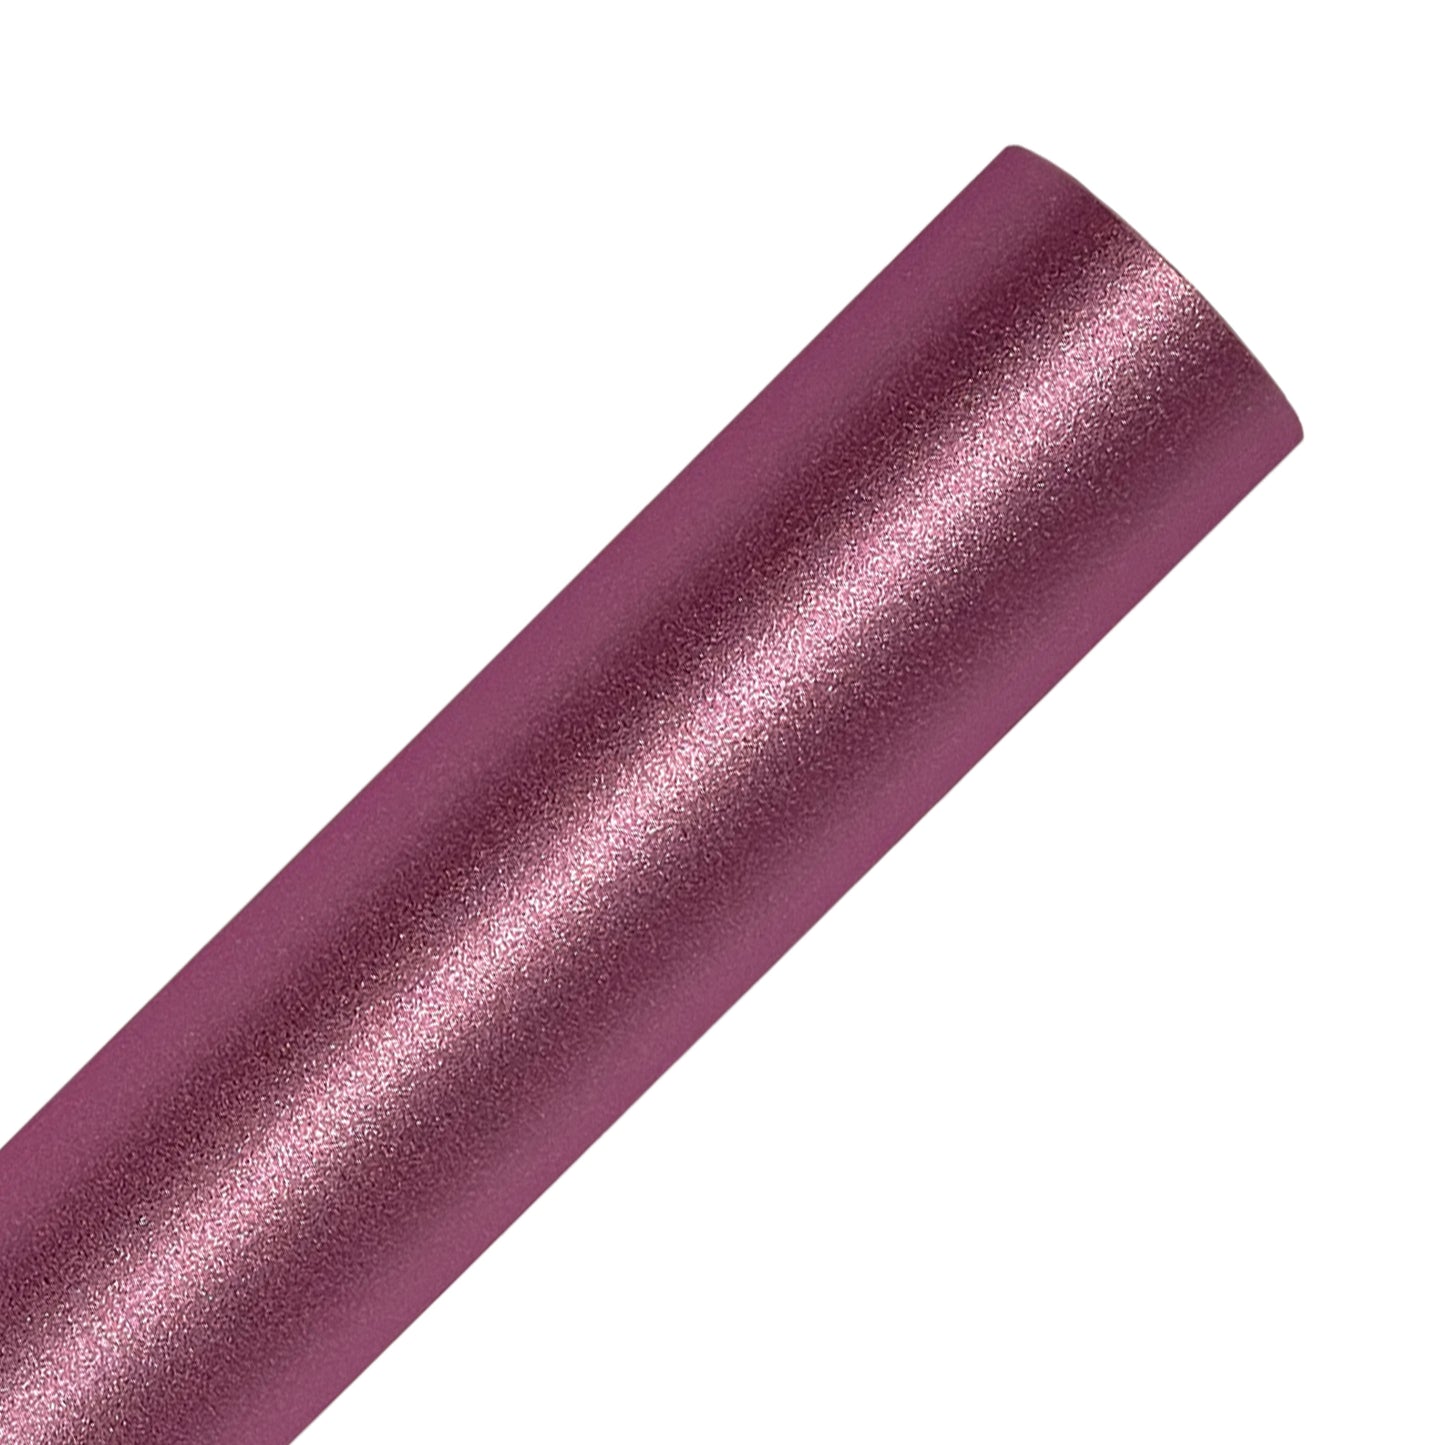 Light Pink Glitter Adhesive Vinyl Rolls By Craftables – shopcraftables